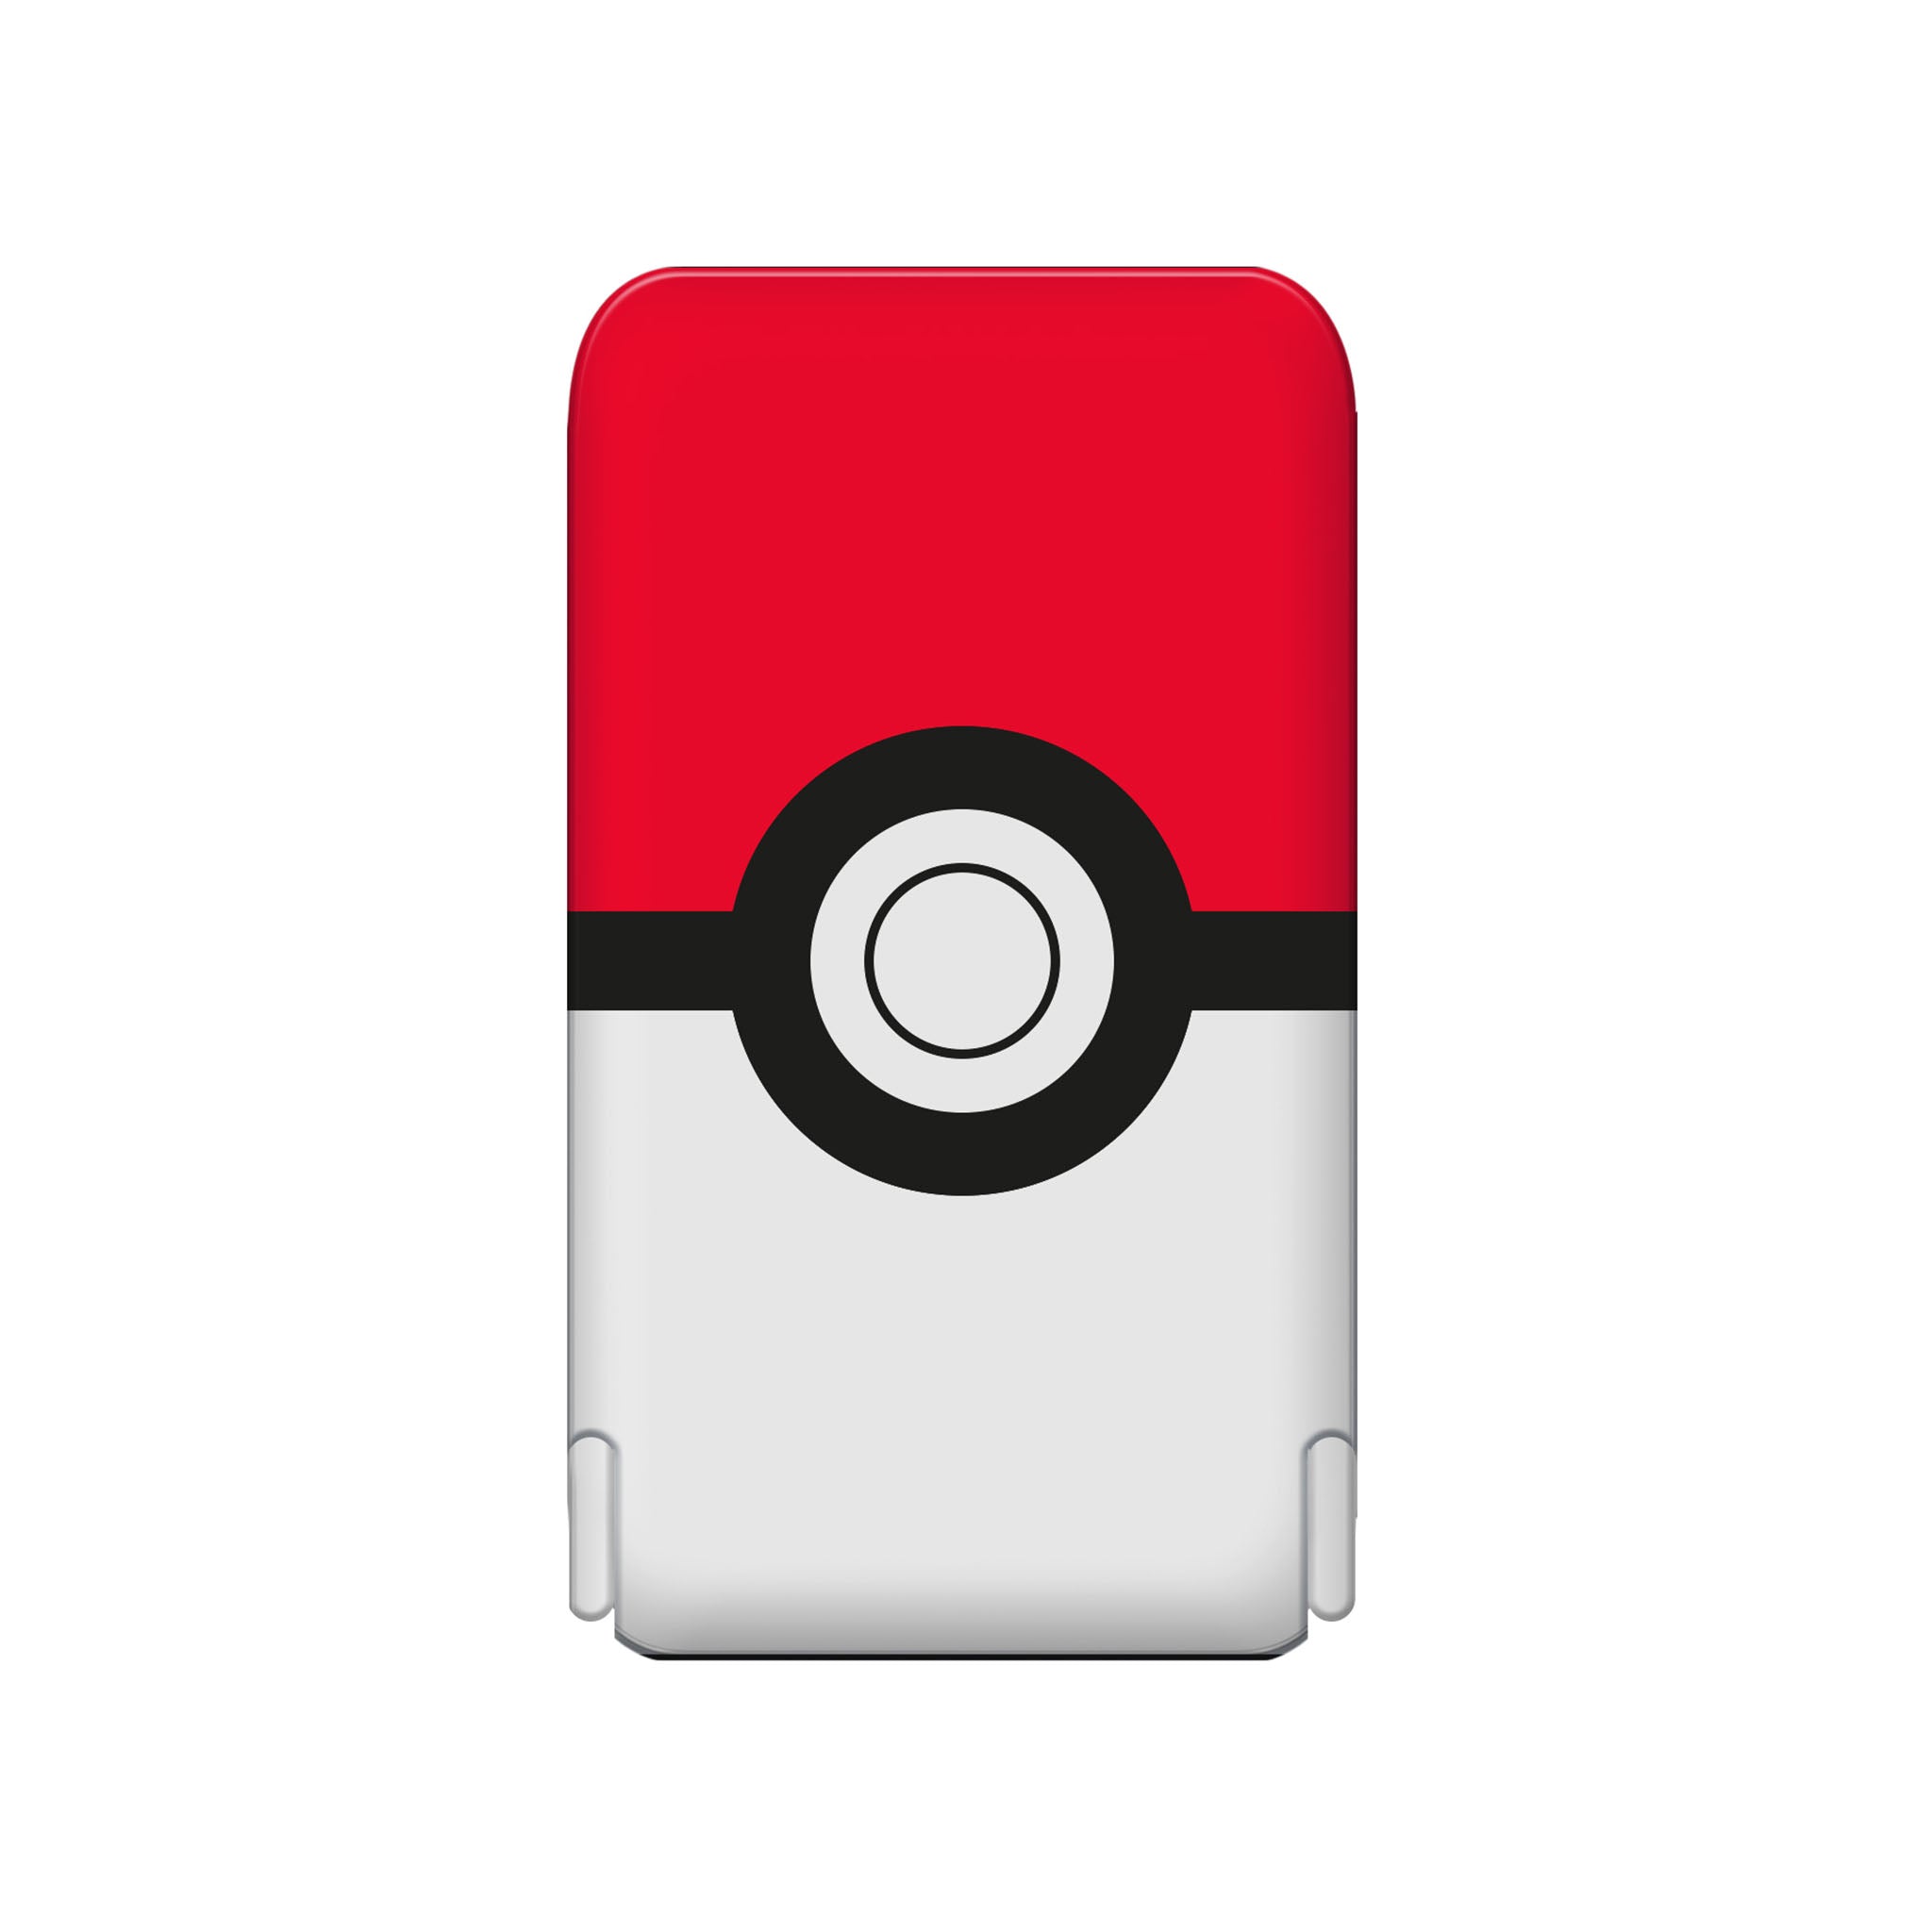 Pokémon Pokéball Magnetic Wireless Power bank